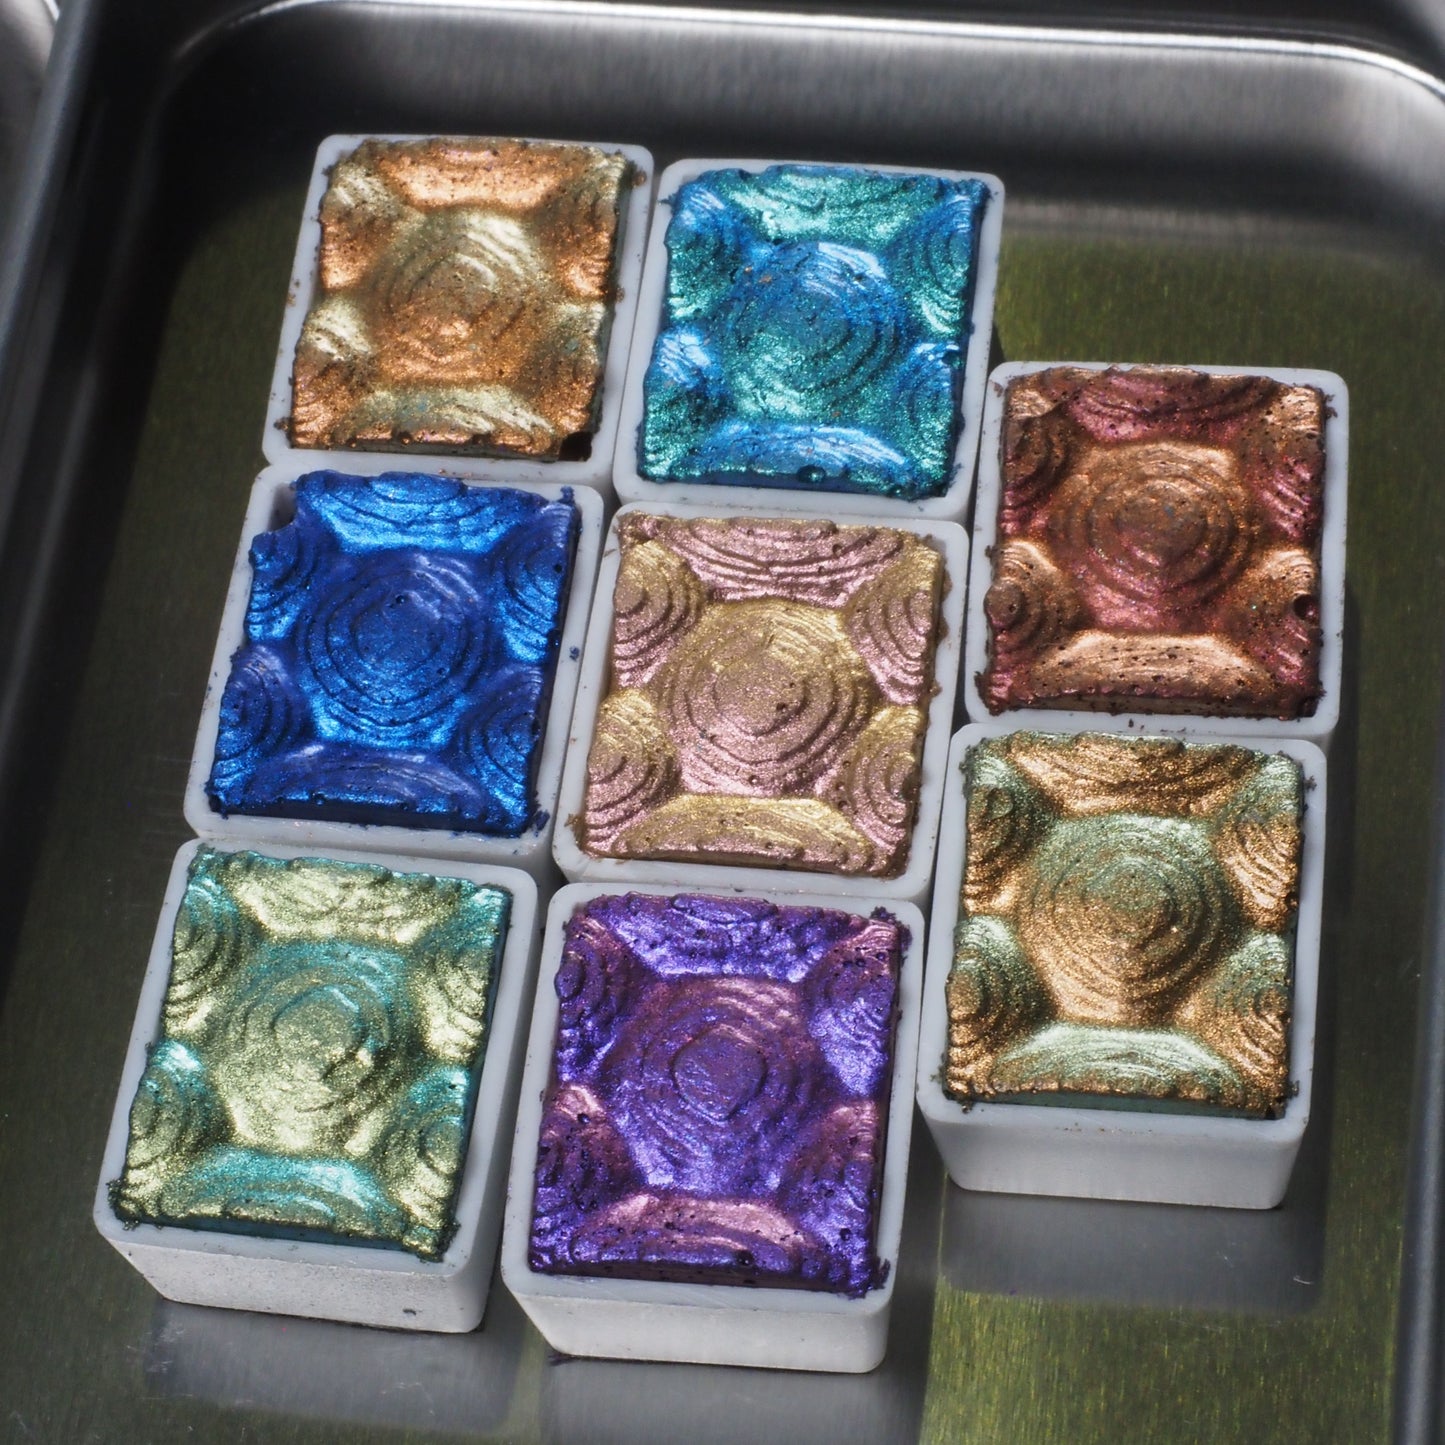 The Skrim Tasty Box- SAVE ~91€ (Supreme Shifter, Skrim Shifter, Pharaos Treasury, Ghost Pearls, Glow Goblin, Glow in the Dark, Glow Sun included) - 25 colors